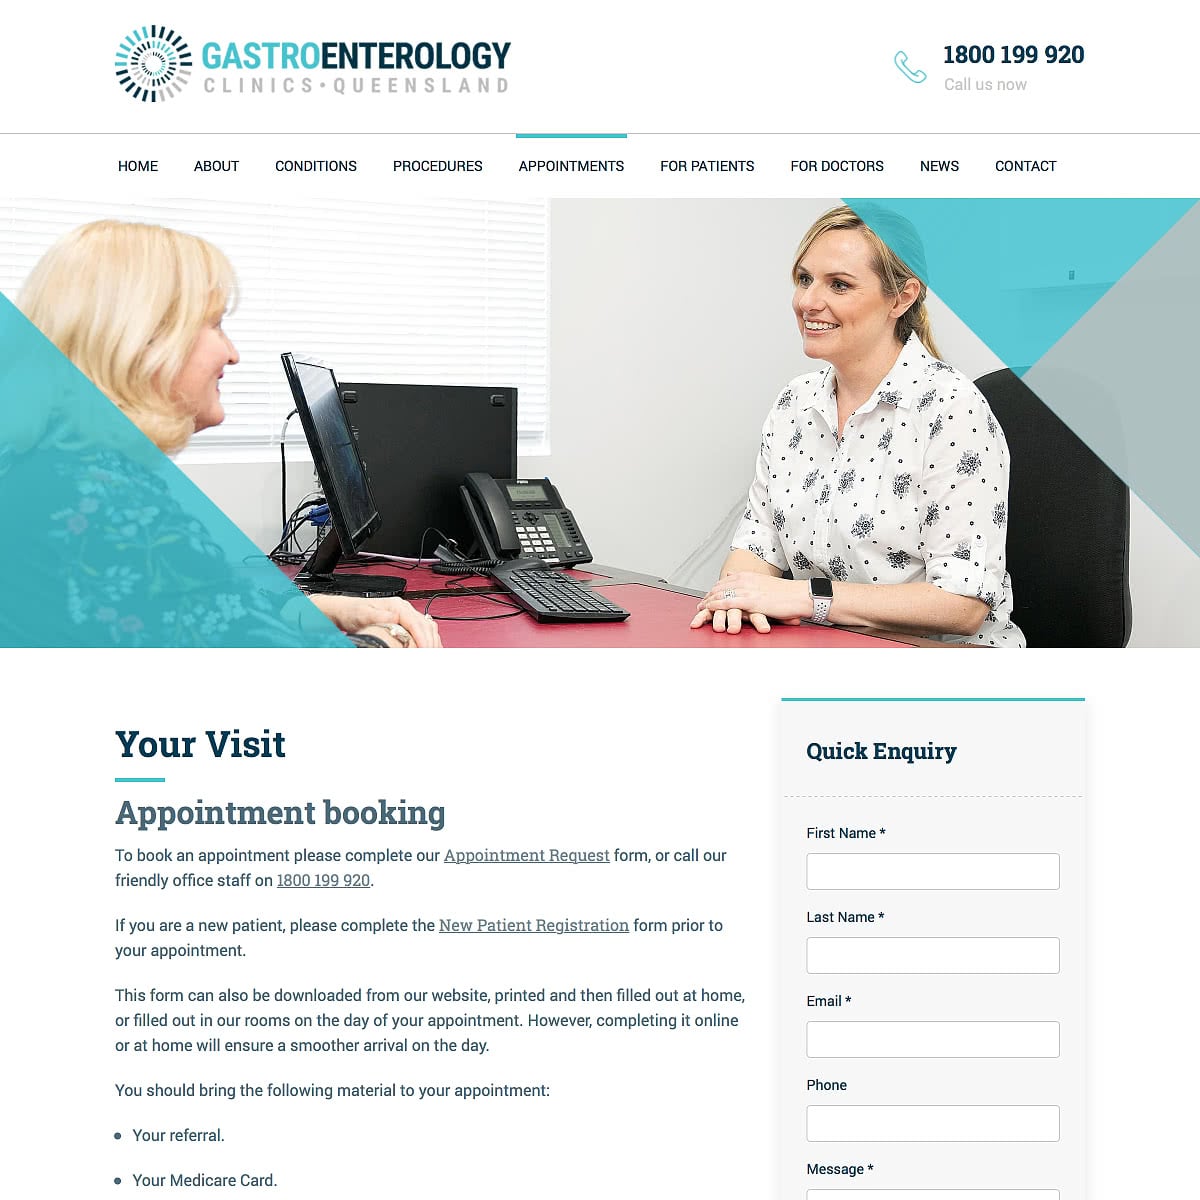 Gastroenterology Clinics Queensland - Your Visit